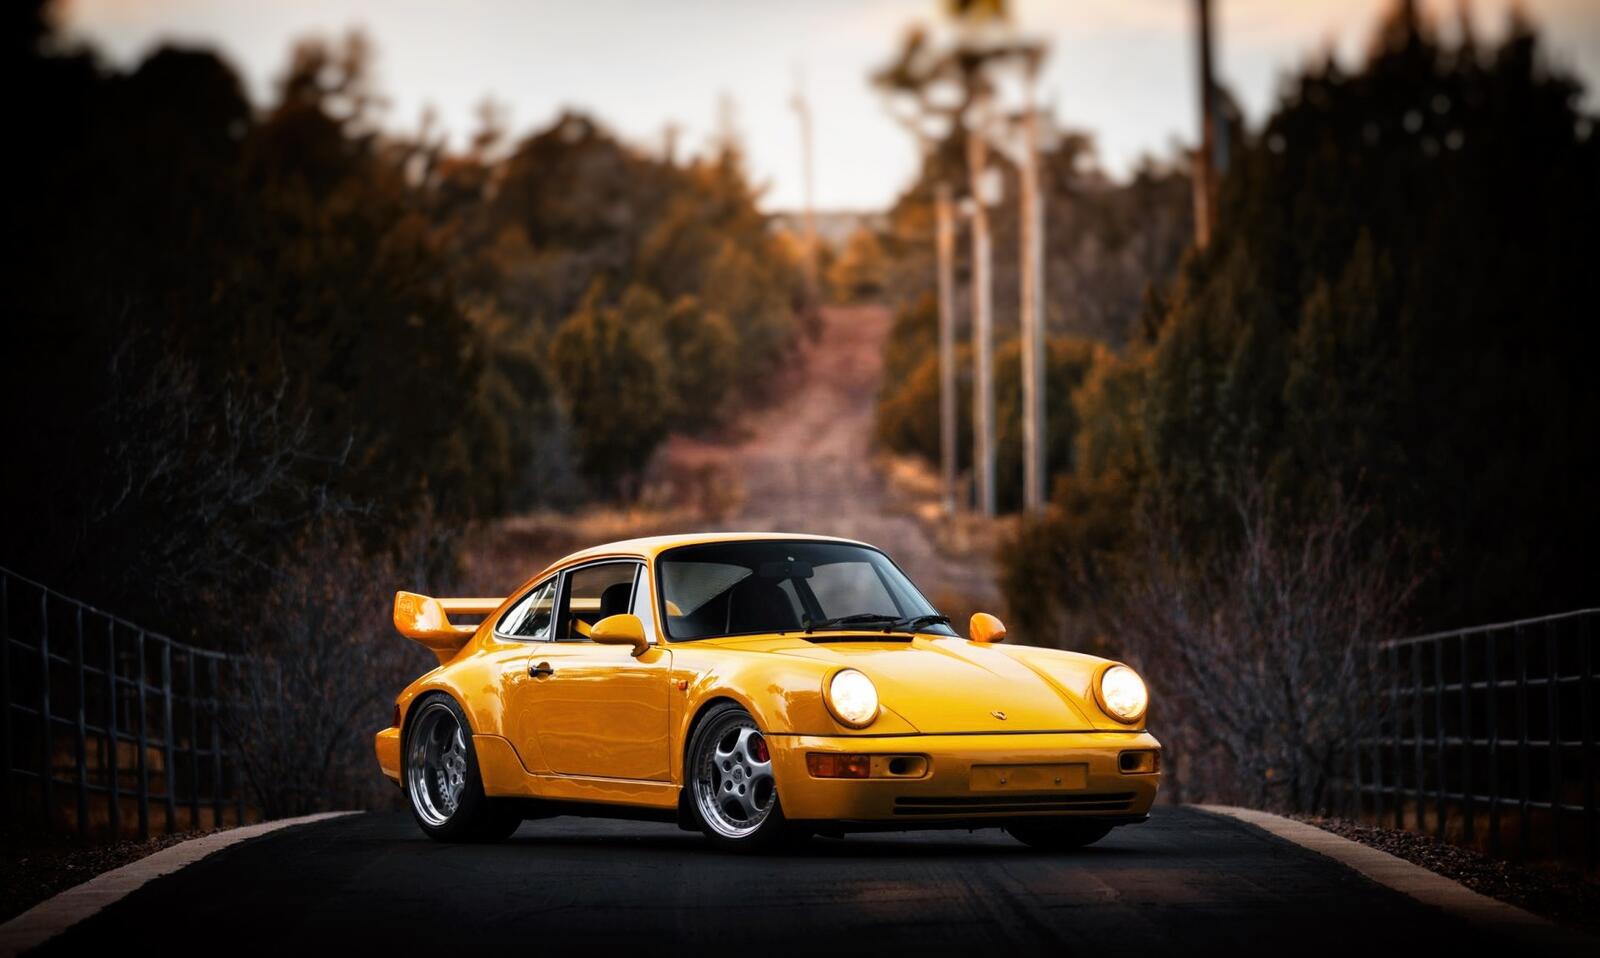 Wallpapers Porsche 911 yellow car supercars on the desktop